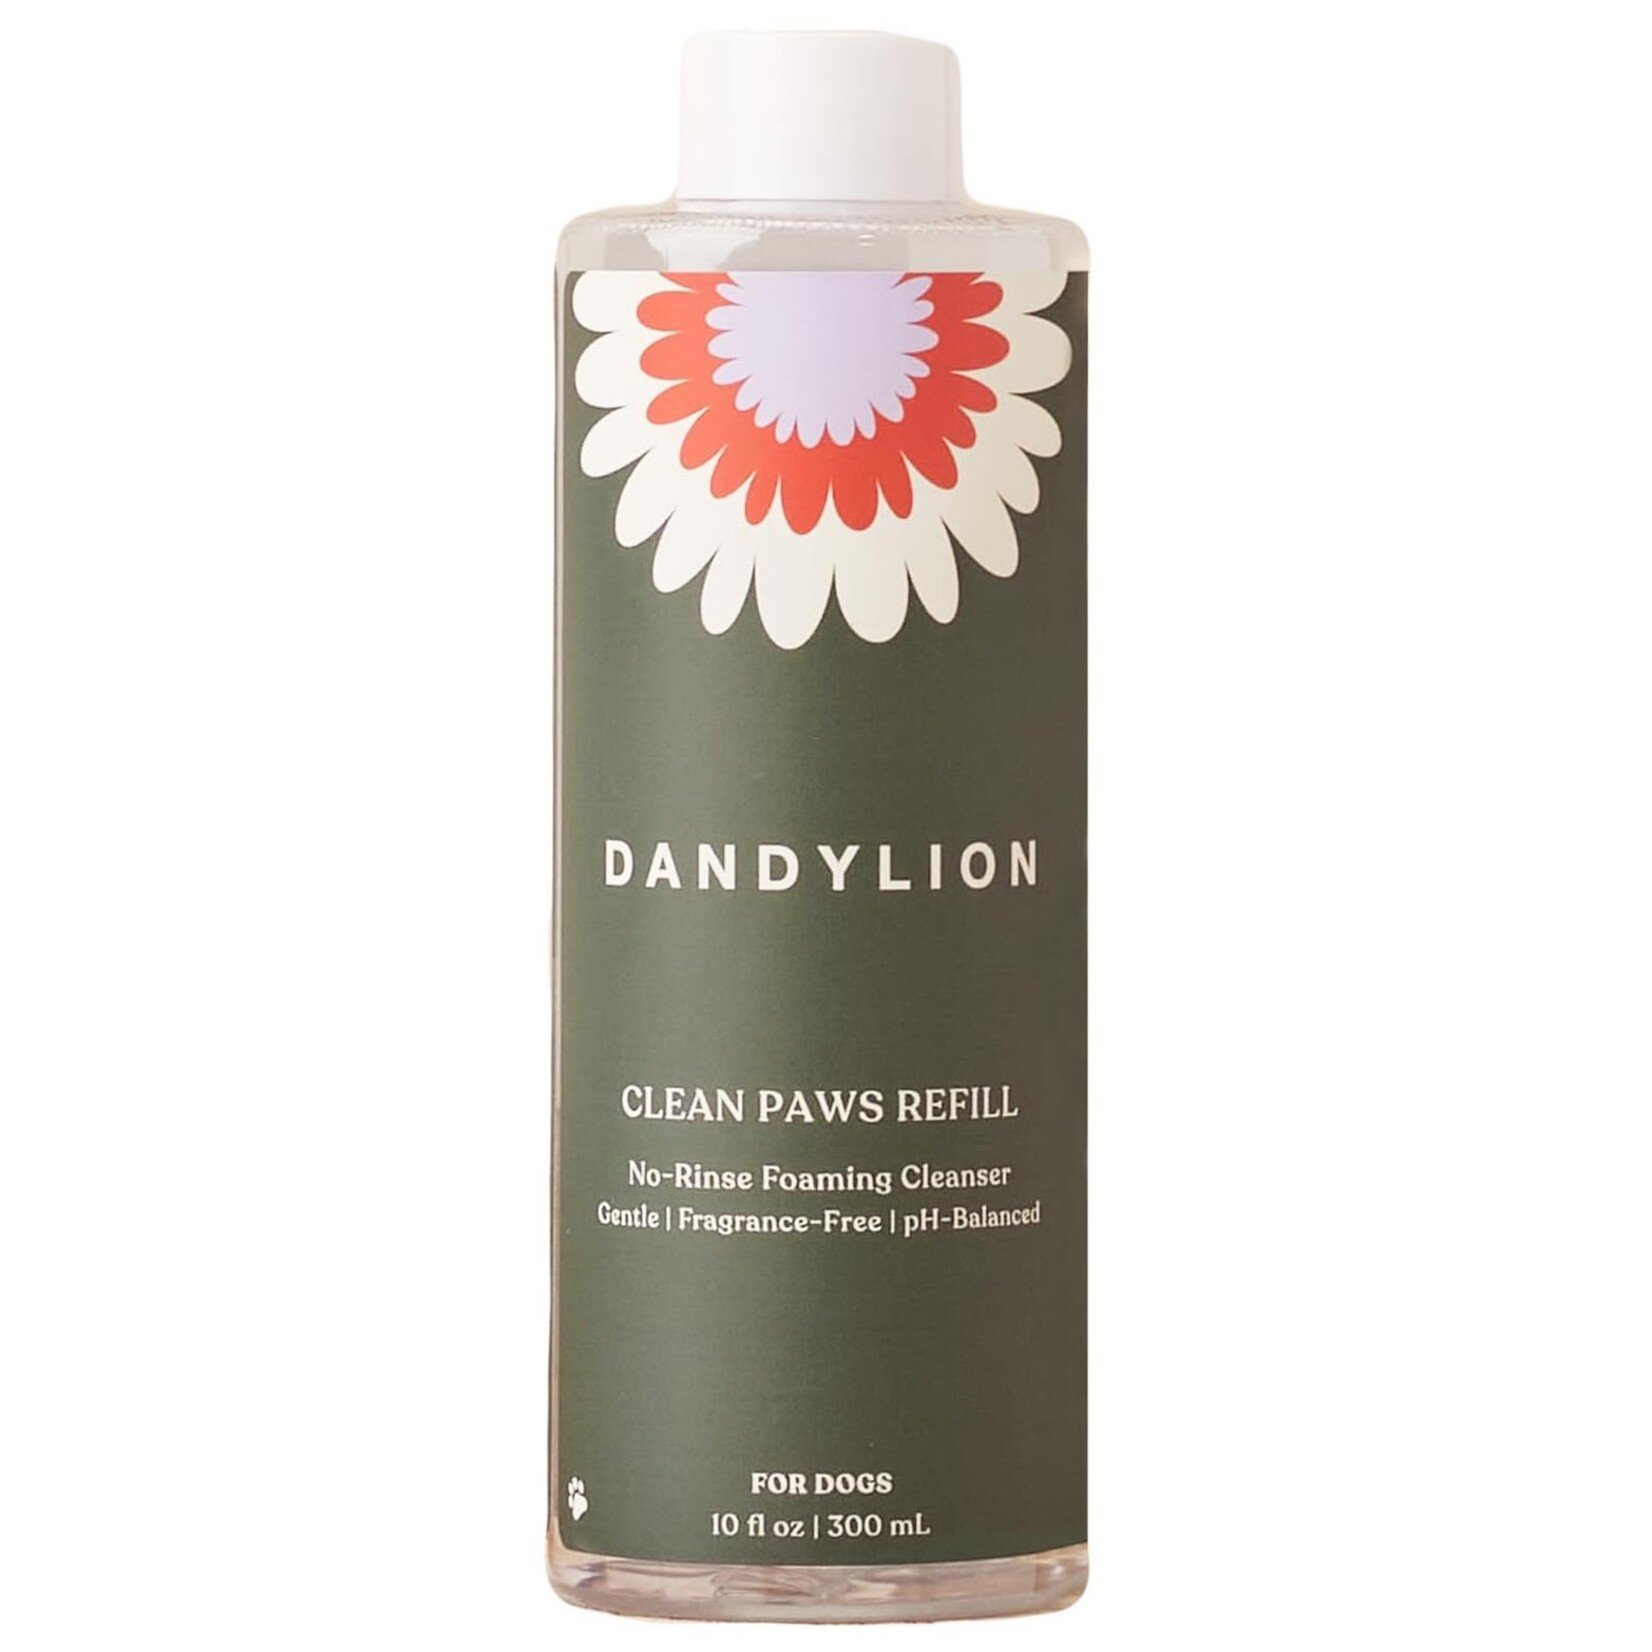 Dandylion Dandylion Clean Paws No-Rinse Foaming Cleanser Refill